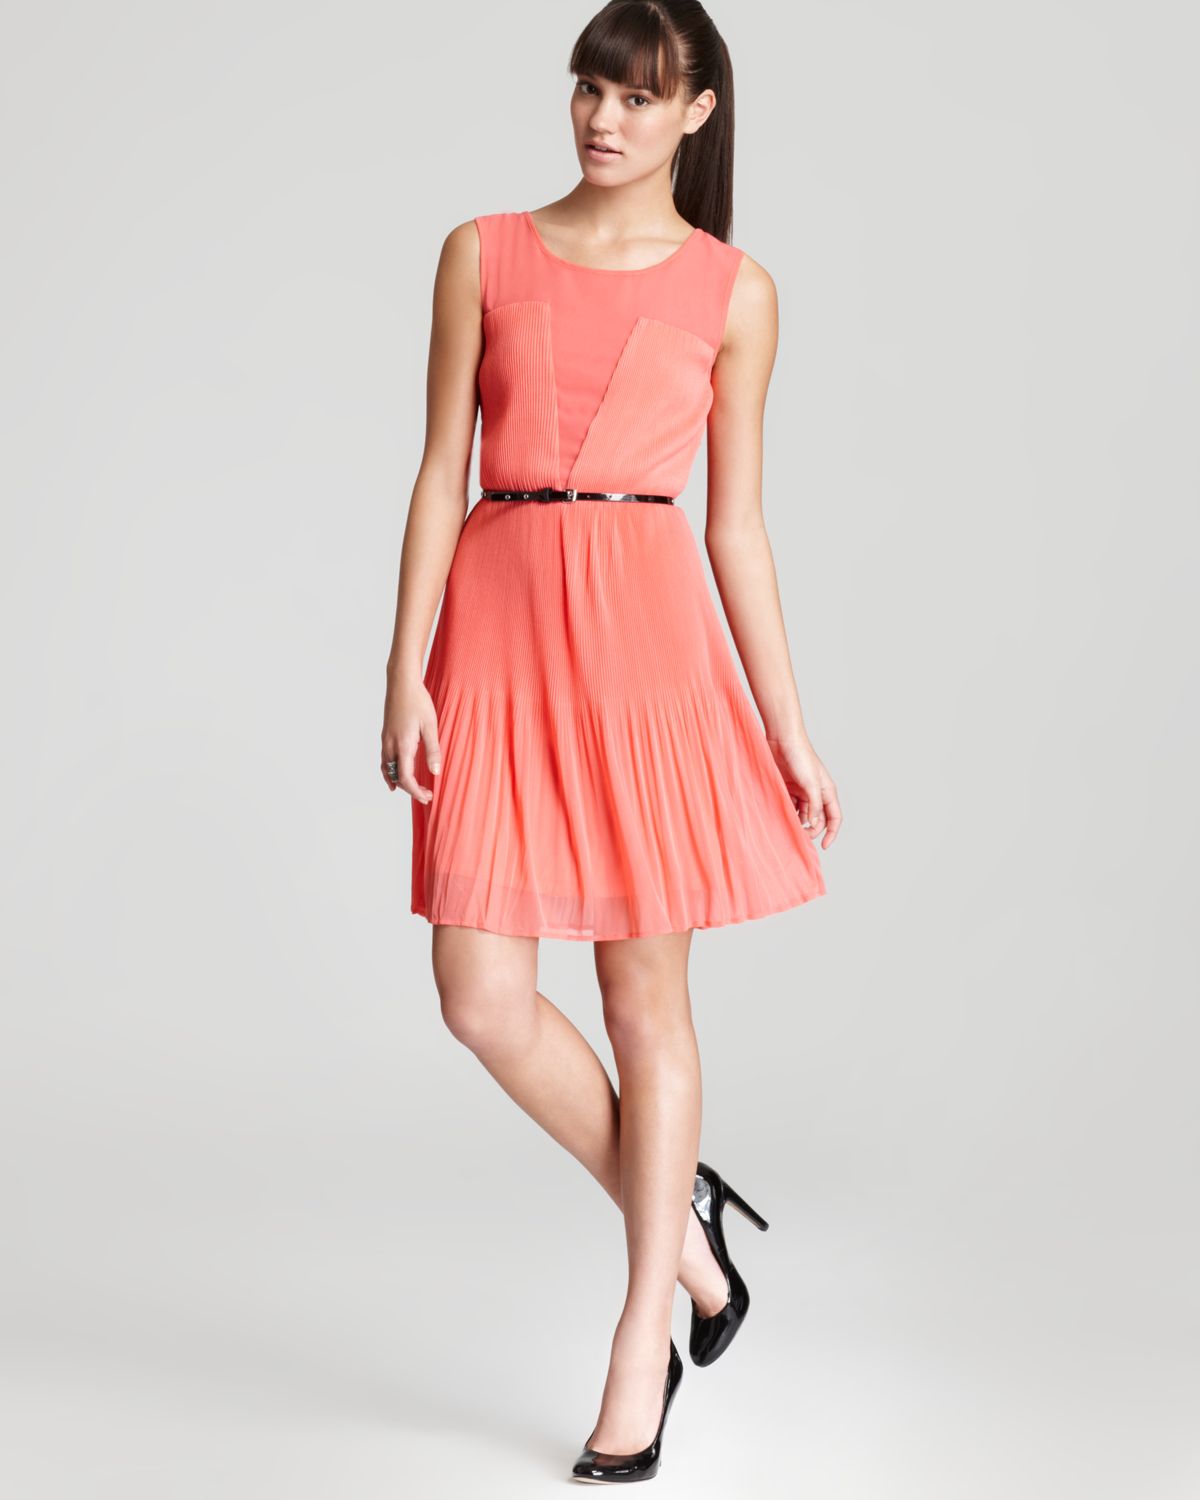 coral color summer dress